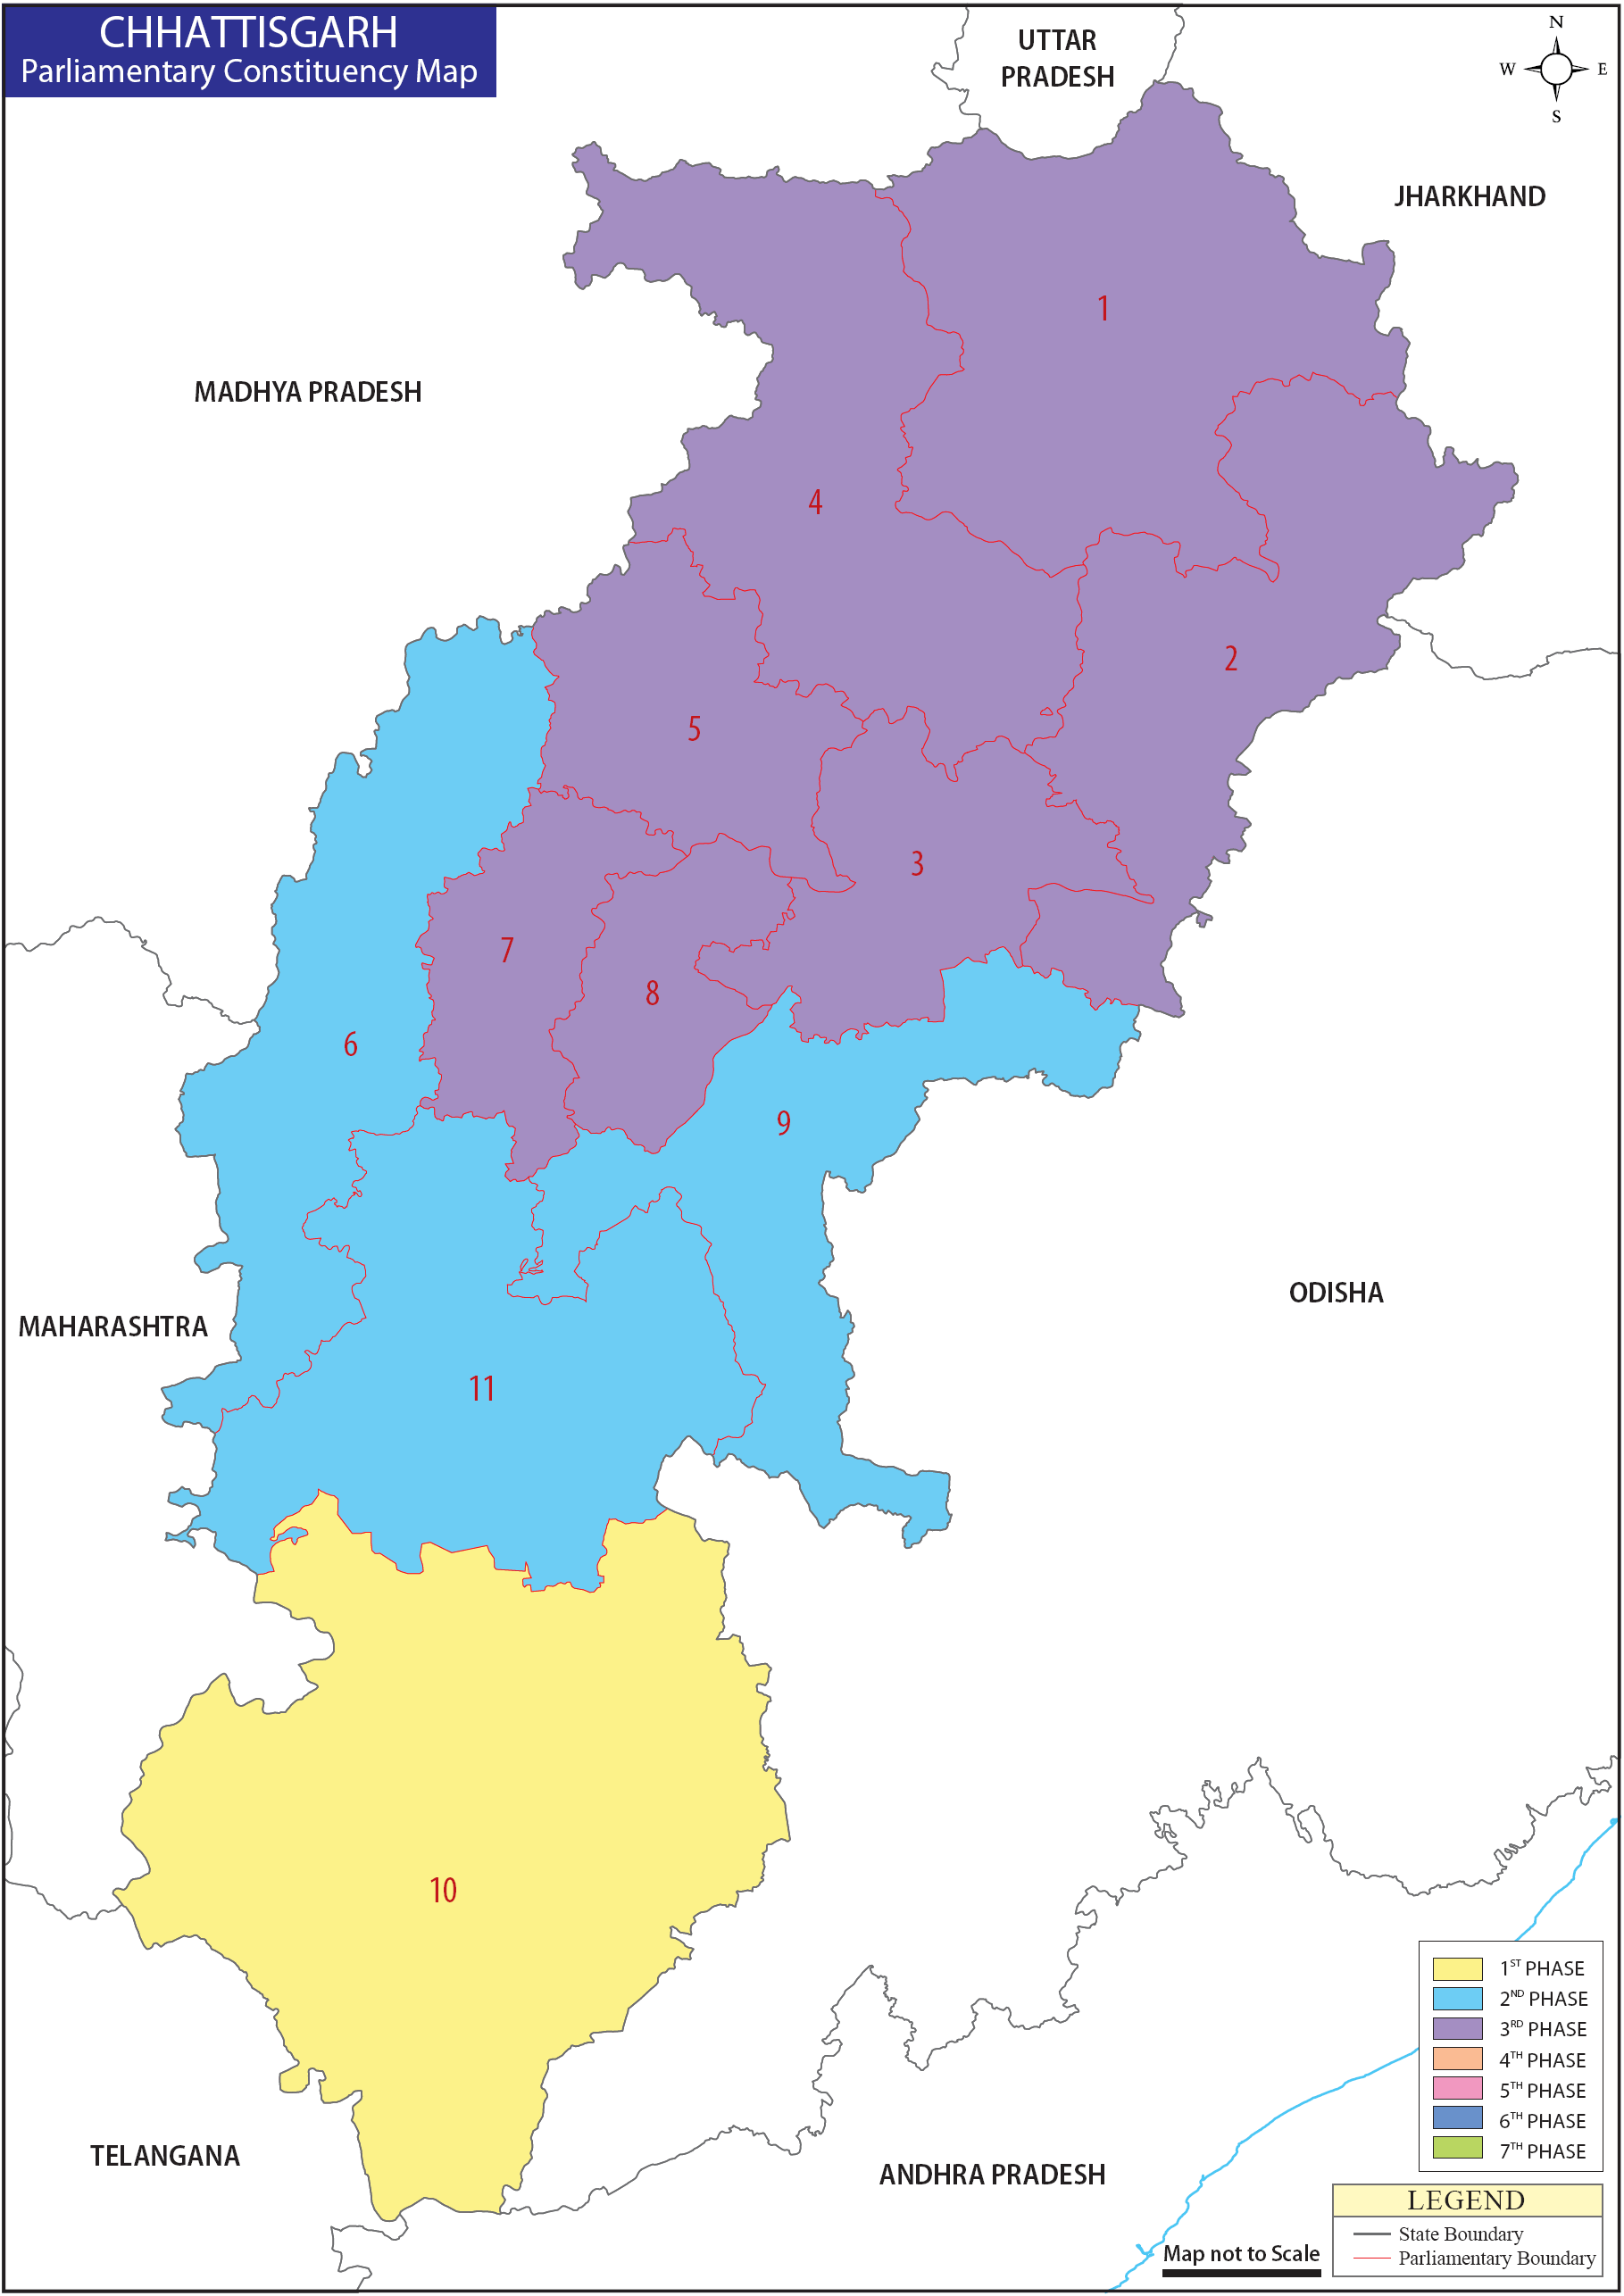 Chhattisgarh Parliamentary Constituency Map